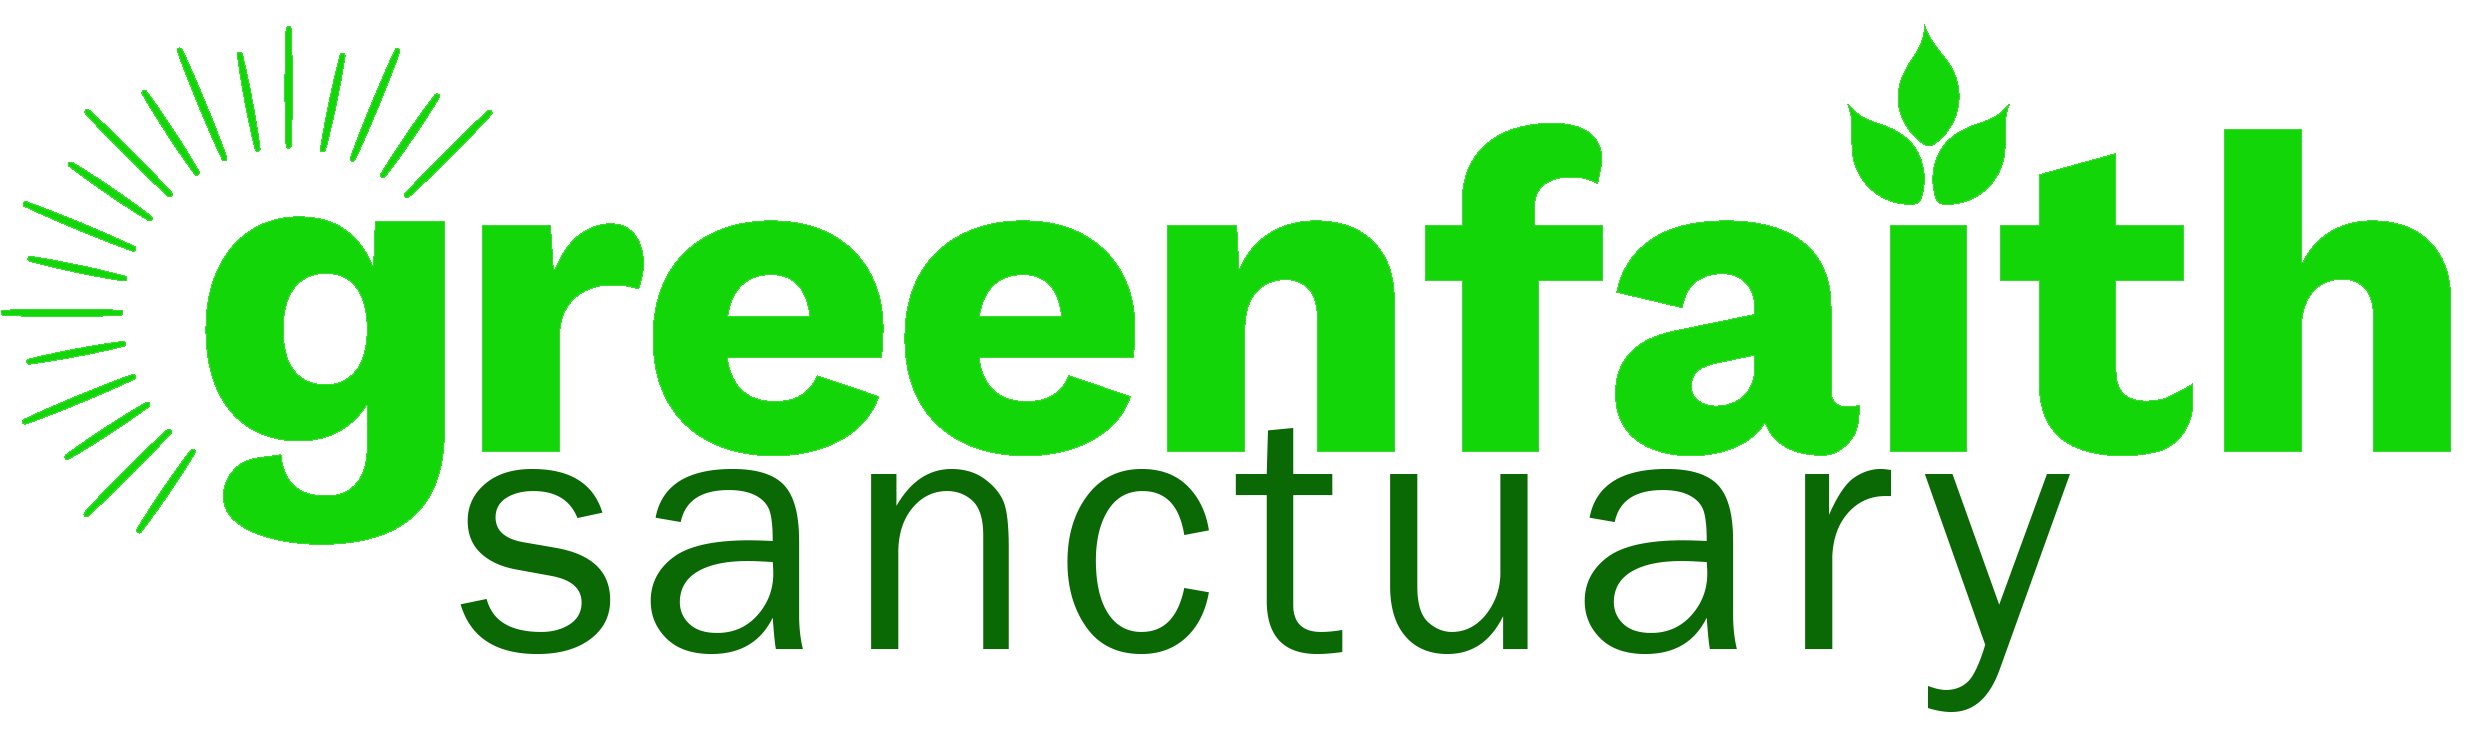 Greenfaith Sanctuary